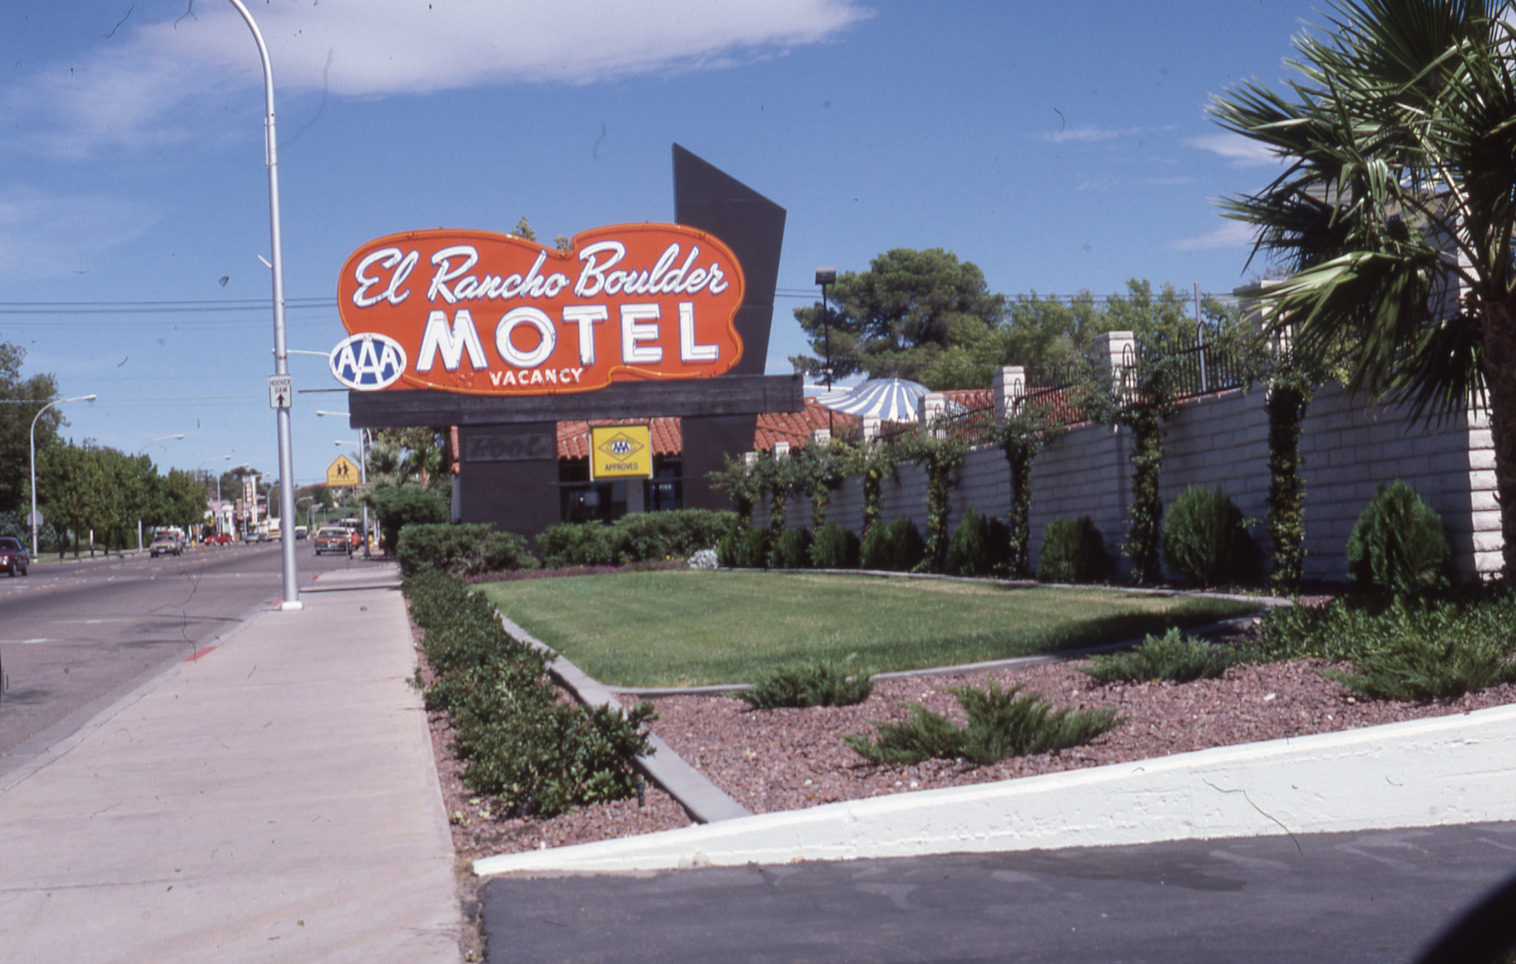 El Rancho Boulder Motel dual mounted pylon sign, Boulder City, Nevada: photographic print